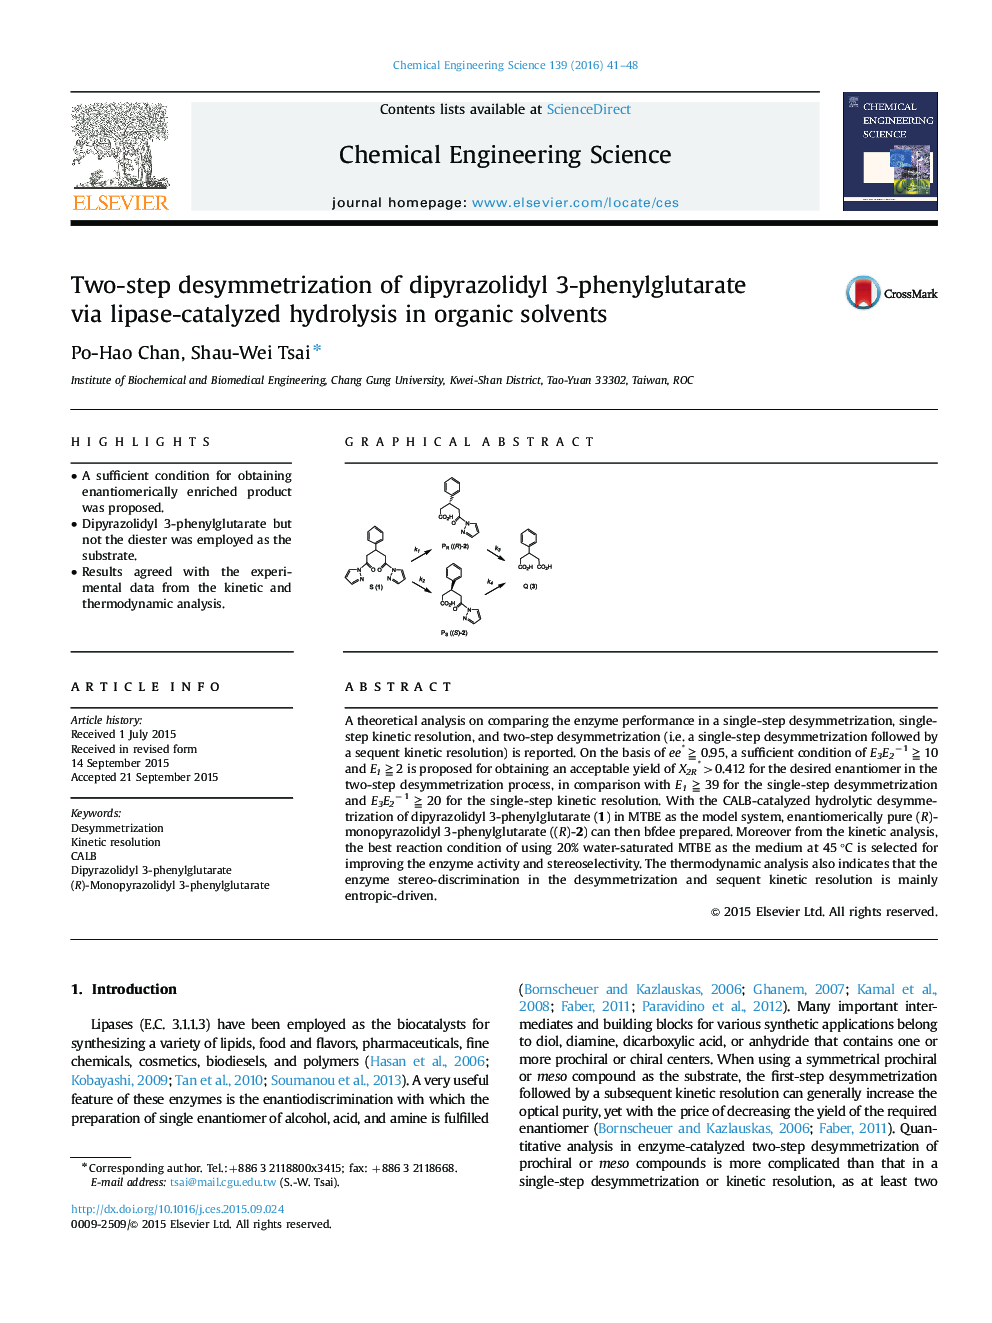 Two-step desymmetrization of dipyrazolidyl 3-phenylglutarate via lipase-catalyzed hydrolysis in organic solvents